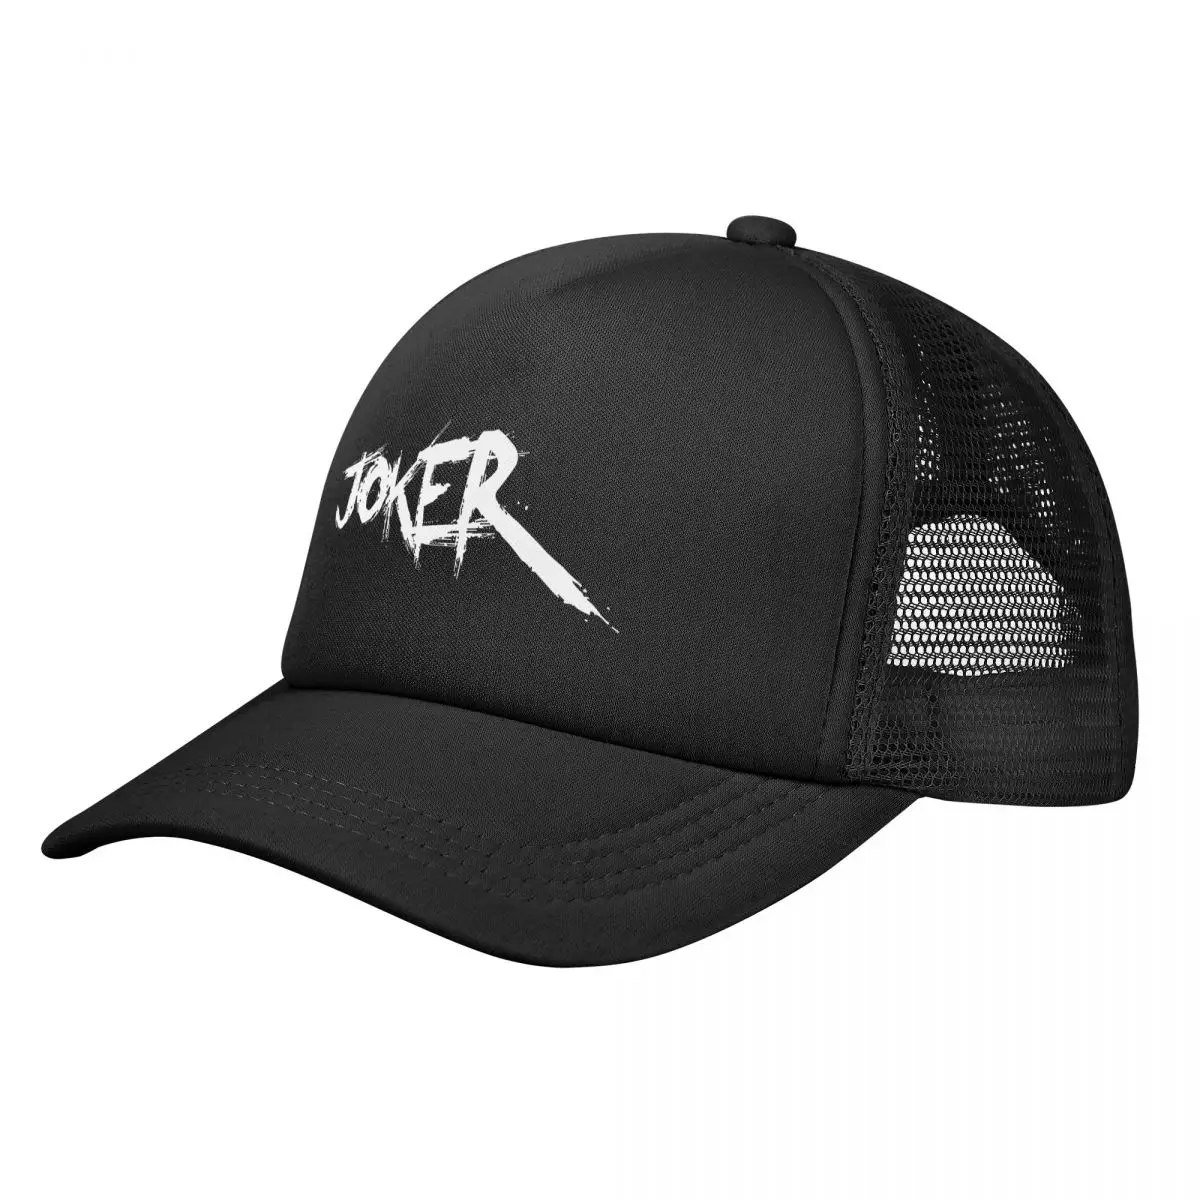 

Joker Stretchy Trucker Hat Mesh Baseball Cap Adjustable Snapback Closure Hats for Men Women Comfortable Breathable